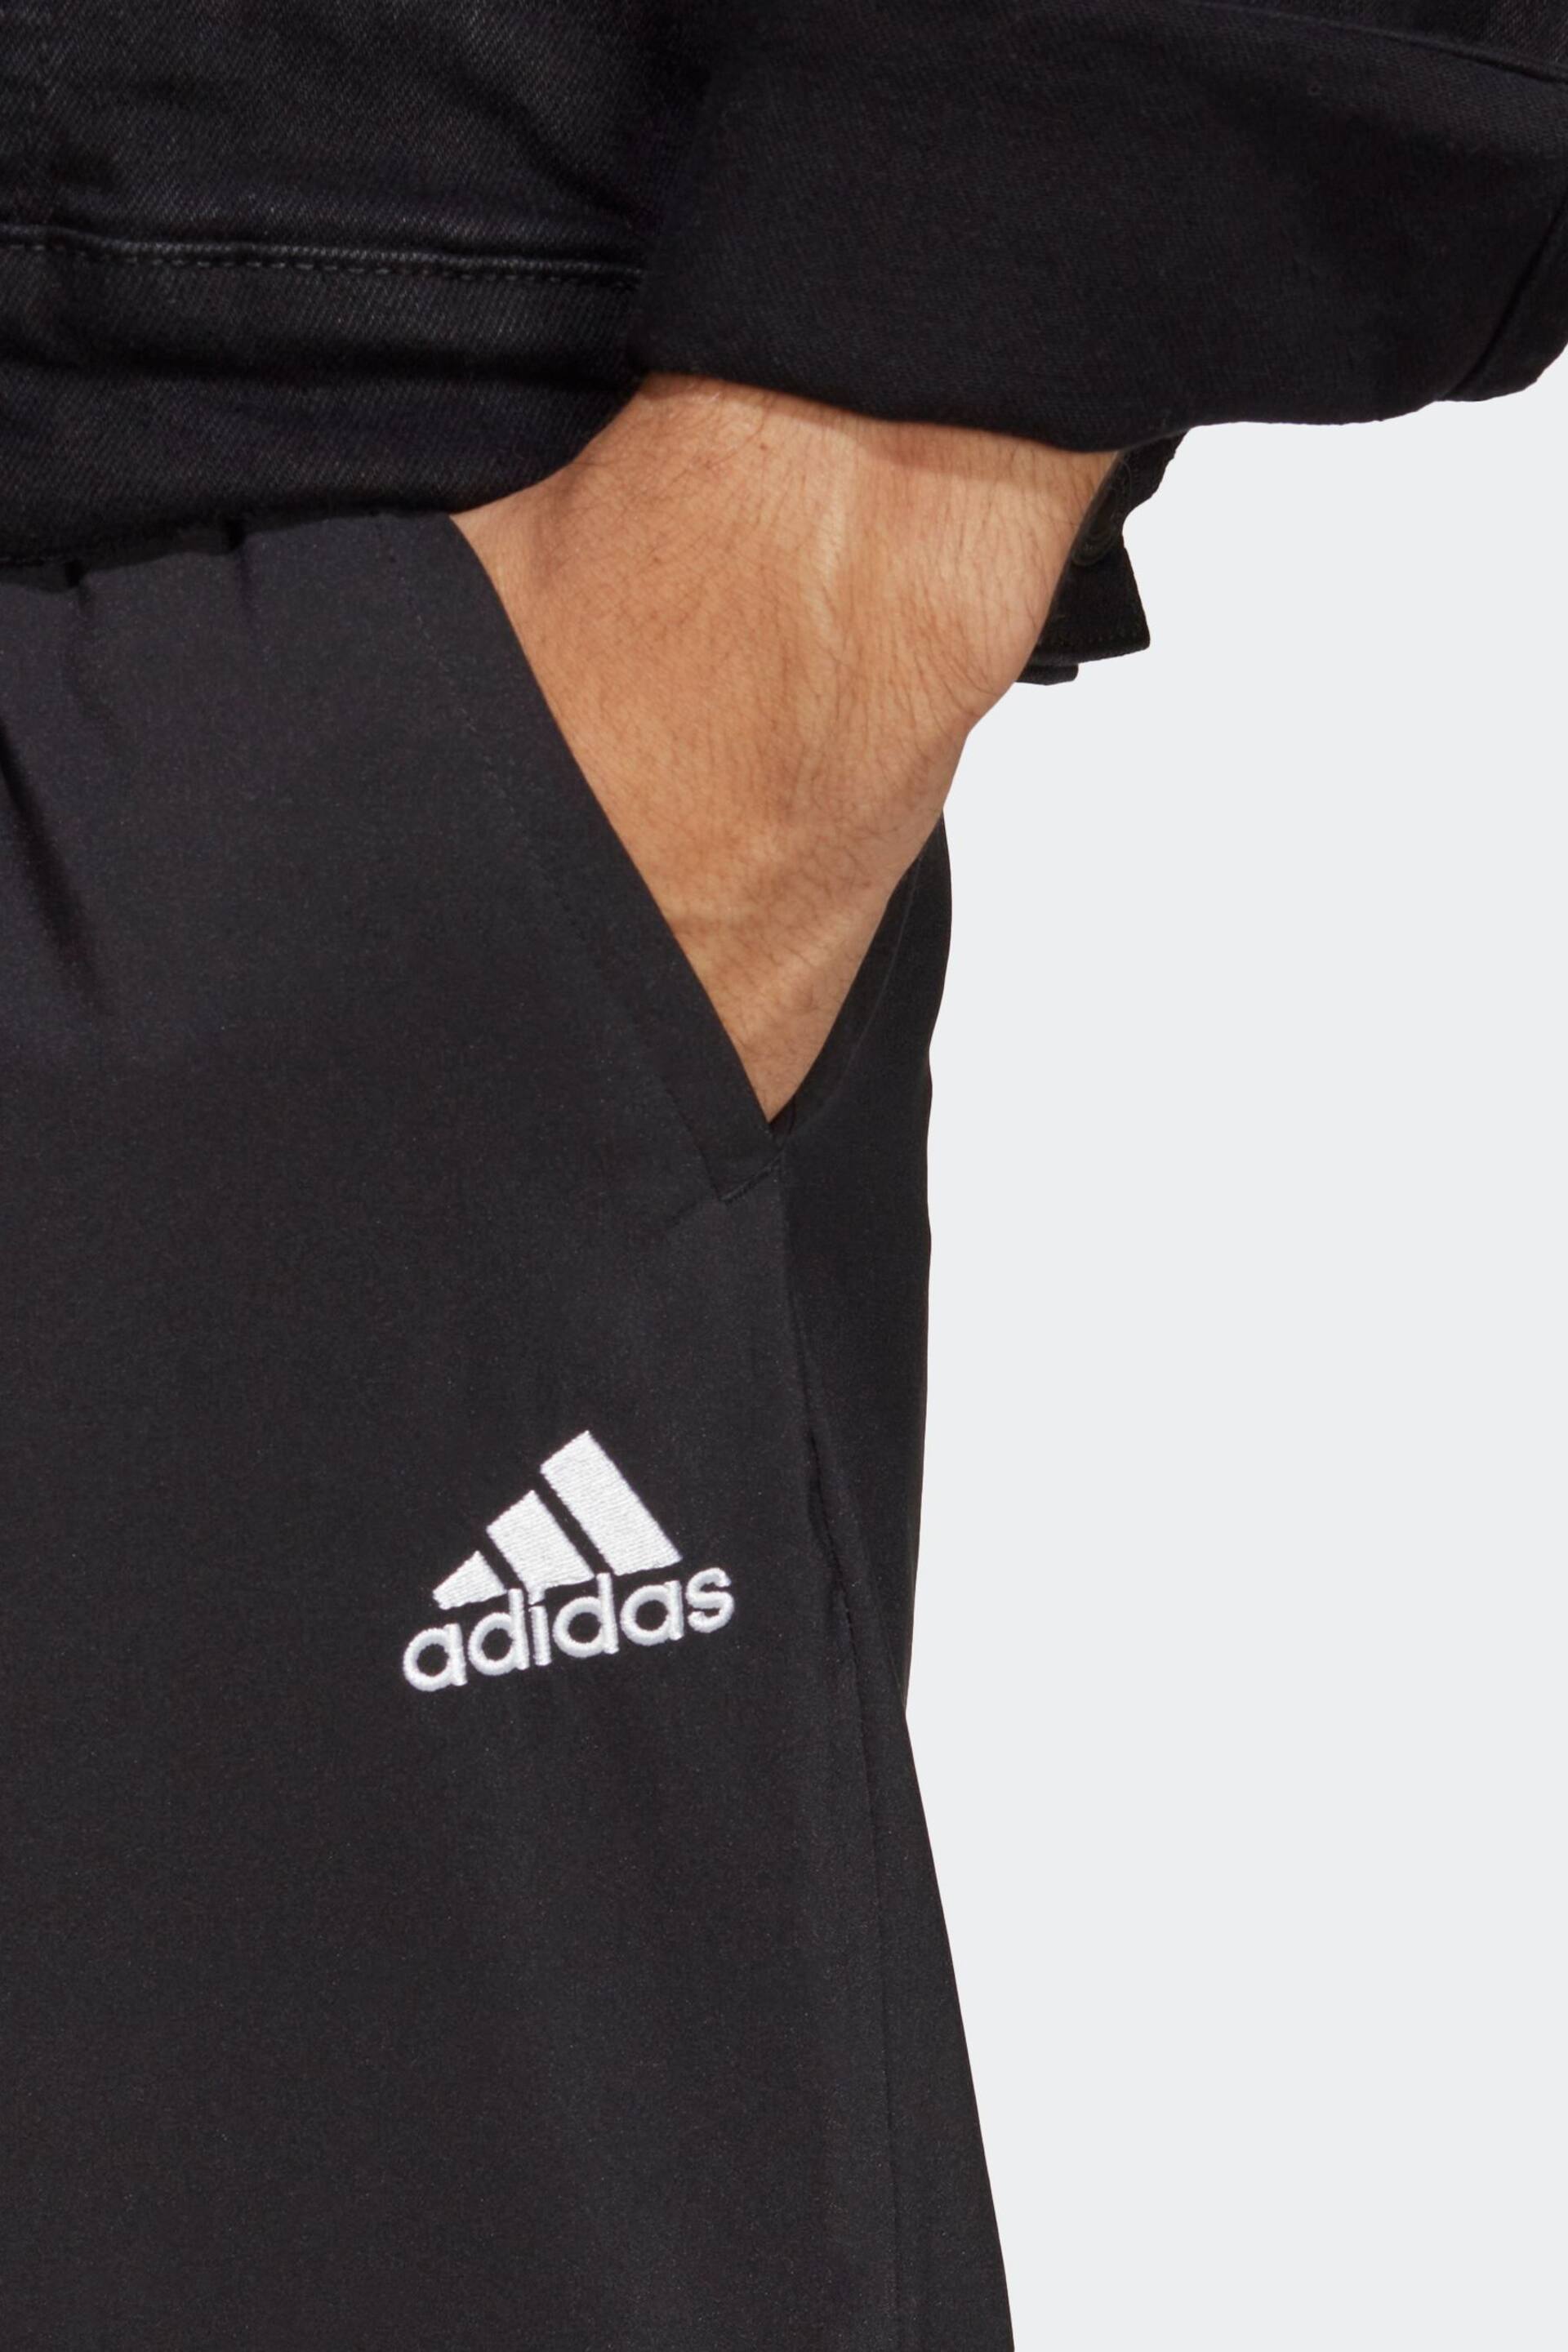 adidas Black Sportswear AEROREADY Essentials Stanford Elastic Cuff Joggers - Image 4 of 6